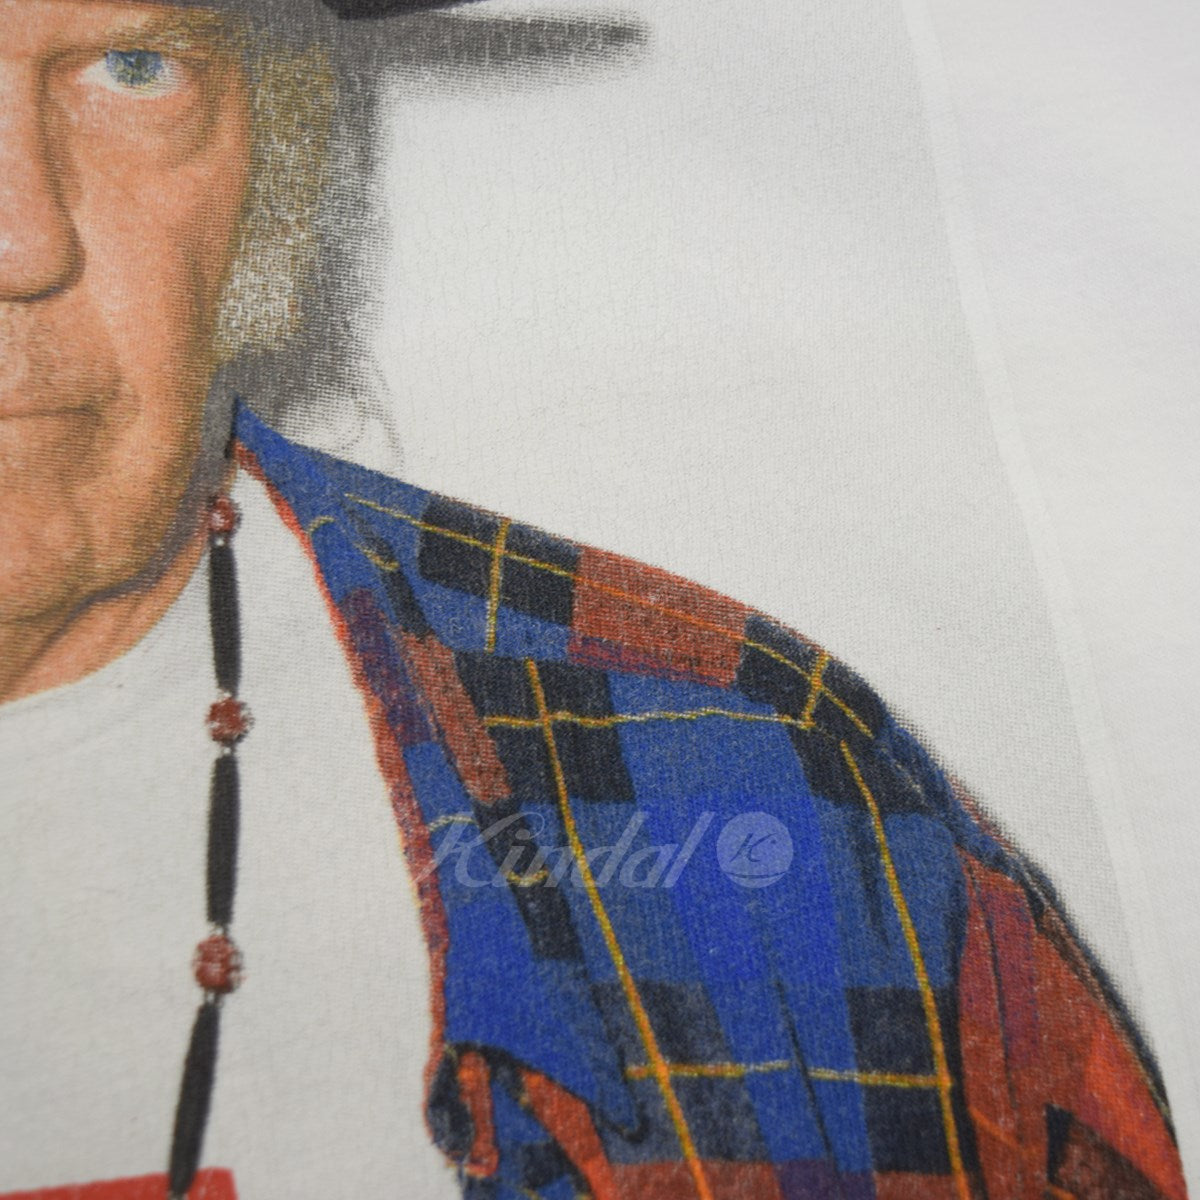 SUPREME(シュプリーム) Neil Young Tee ニールヤング プリントTシャツ 2015SS